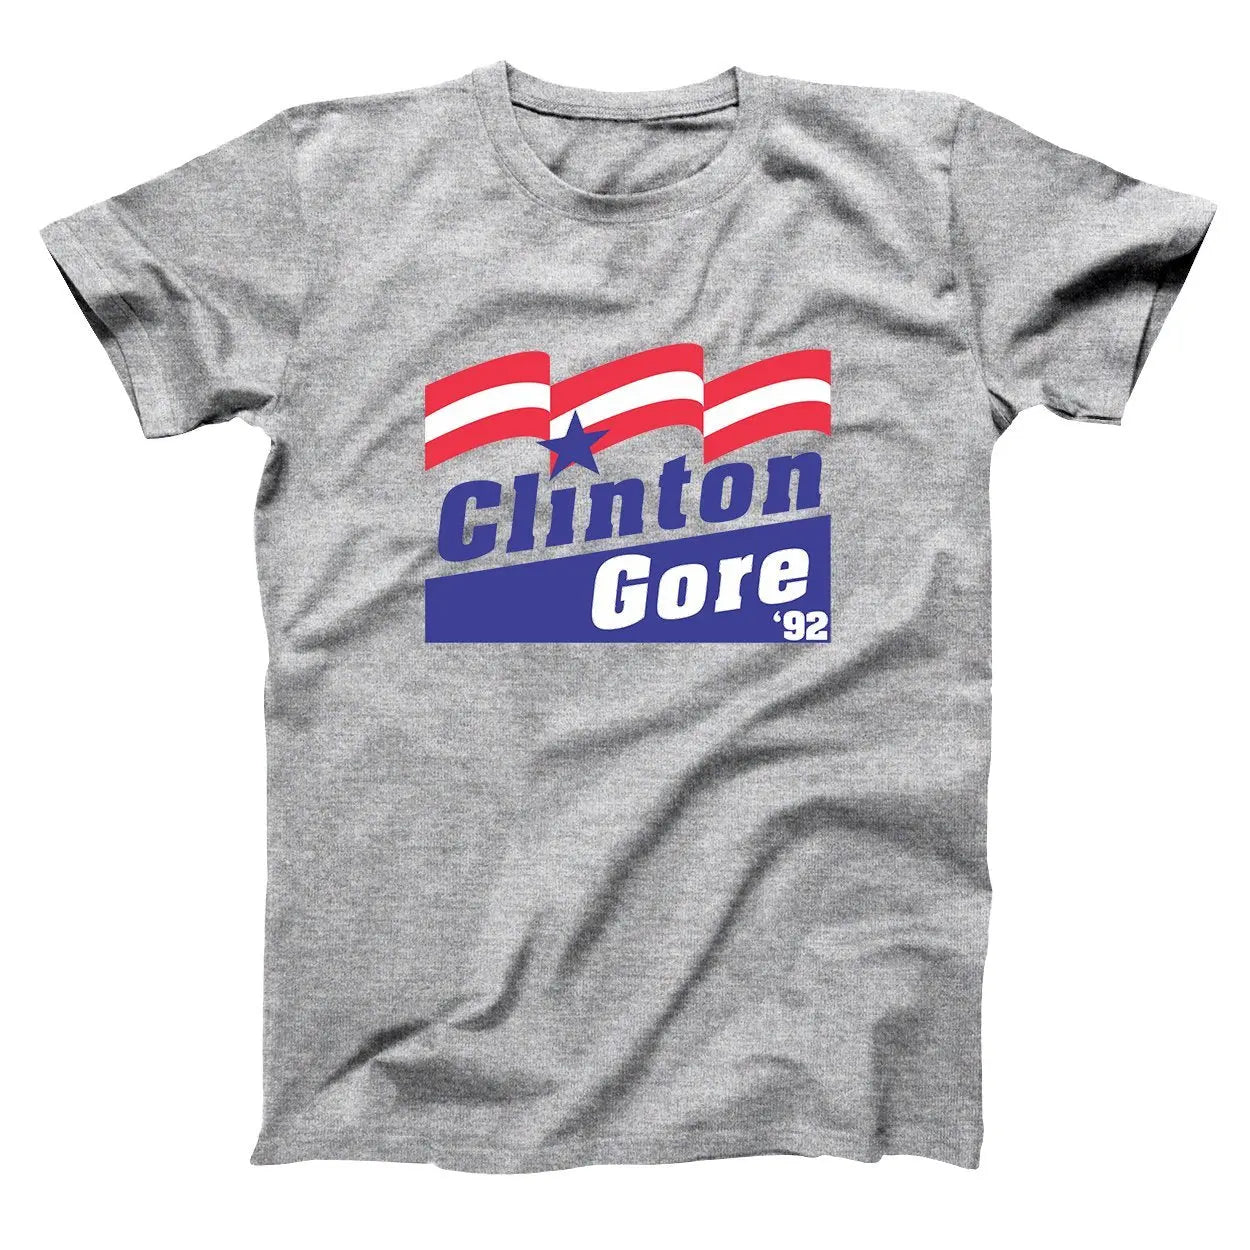 Clinton Gore 92 Election Tshirt - Donkey Tees